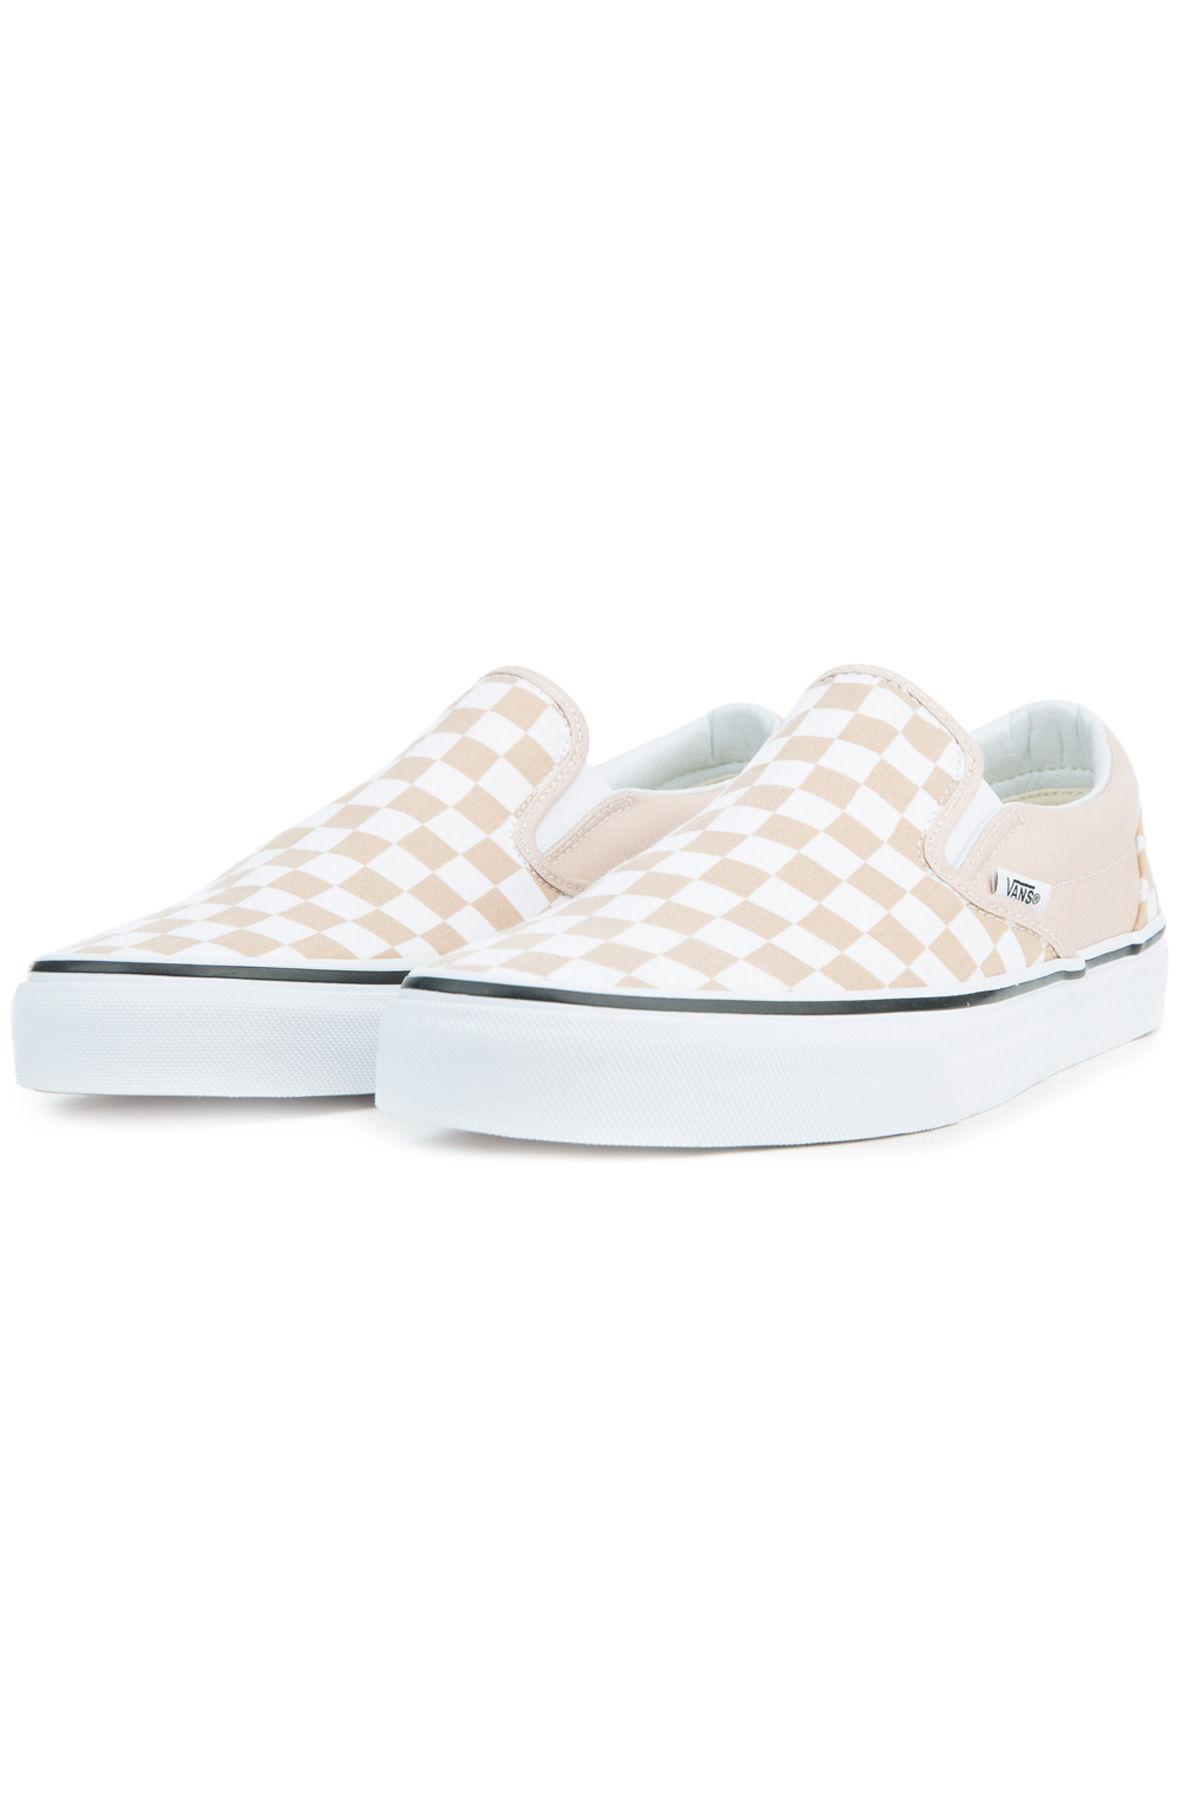 vans checkerboard frappe & true white womens slip on shoes